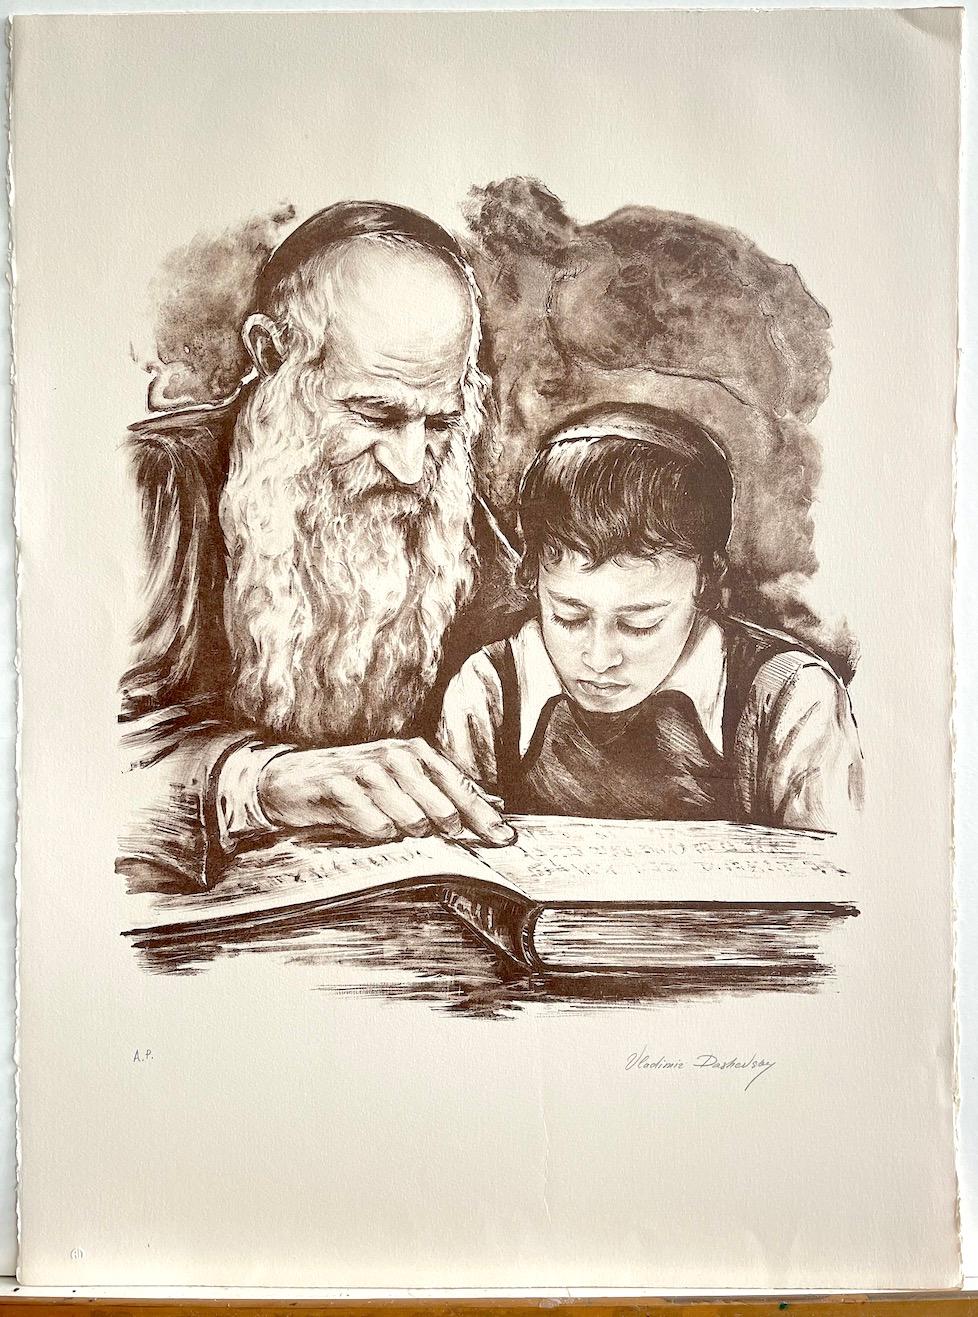 RABBI TEACHING Signed Lithograph, Rabbi and Young Boy, Jewish Art, Judaism - Contemporary Print by Vladimir Dashevsky